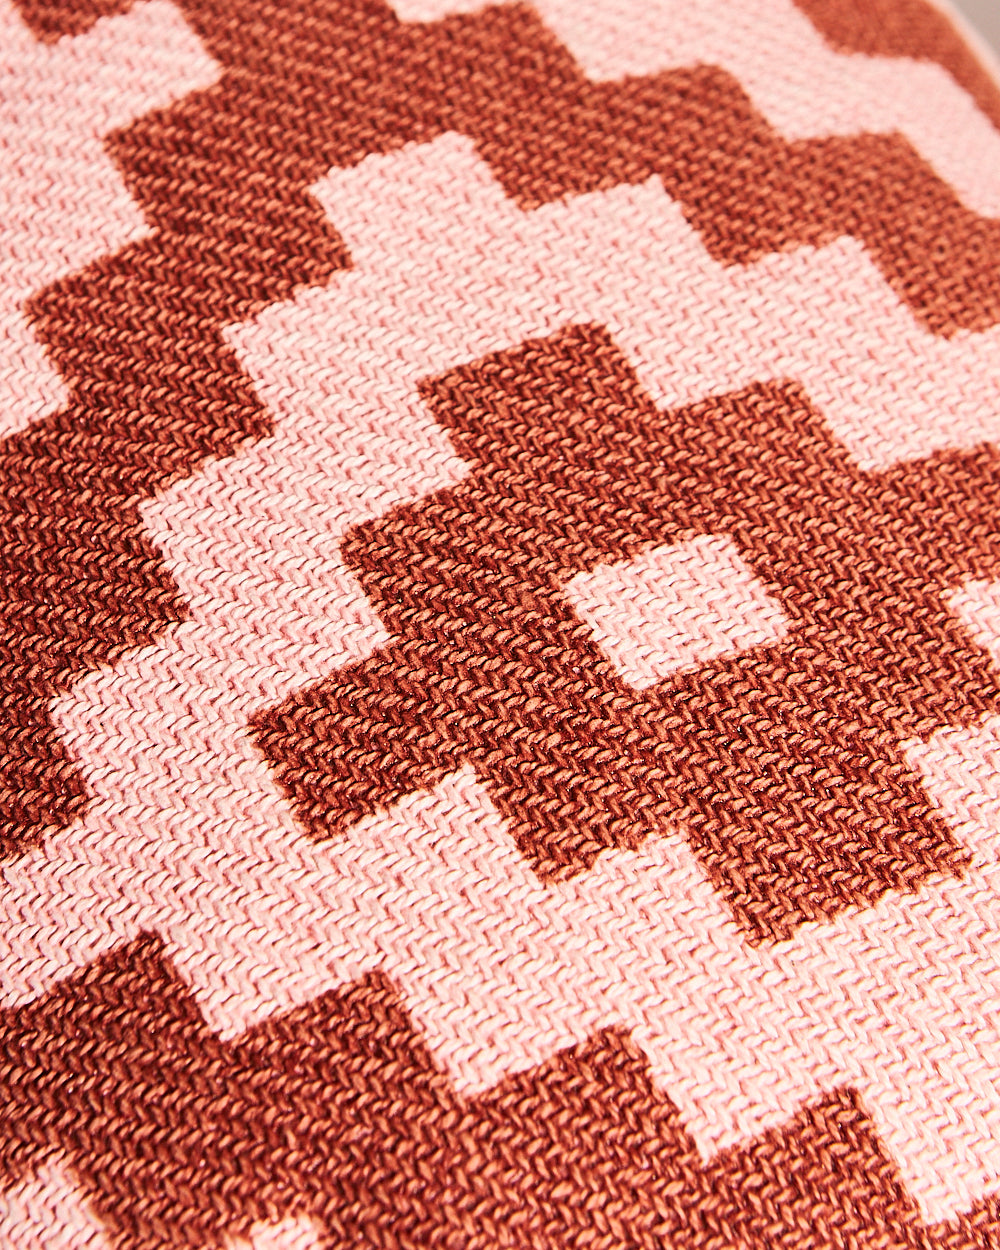 Essentials Aztec Cushion Cover, Pink